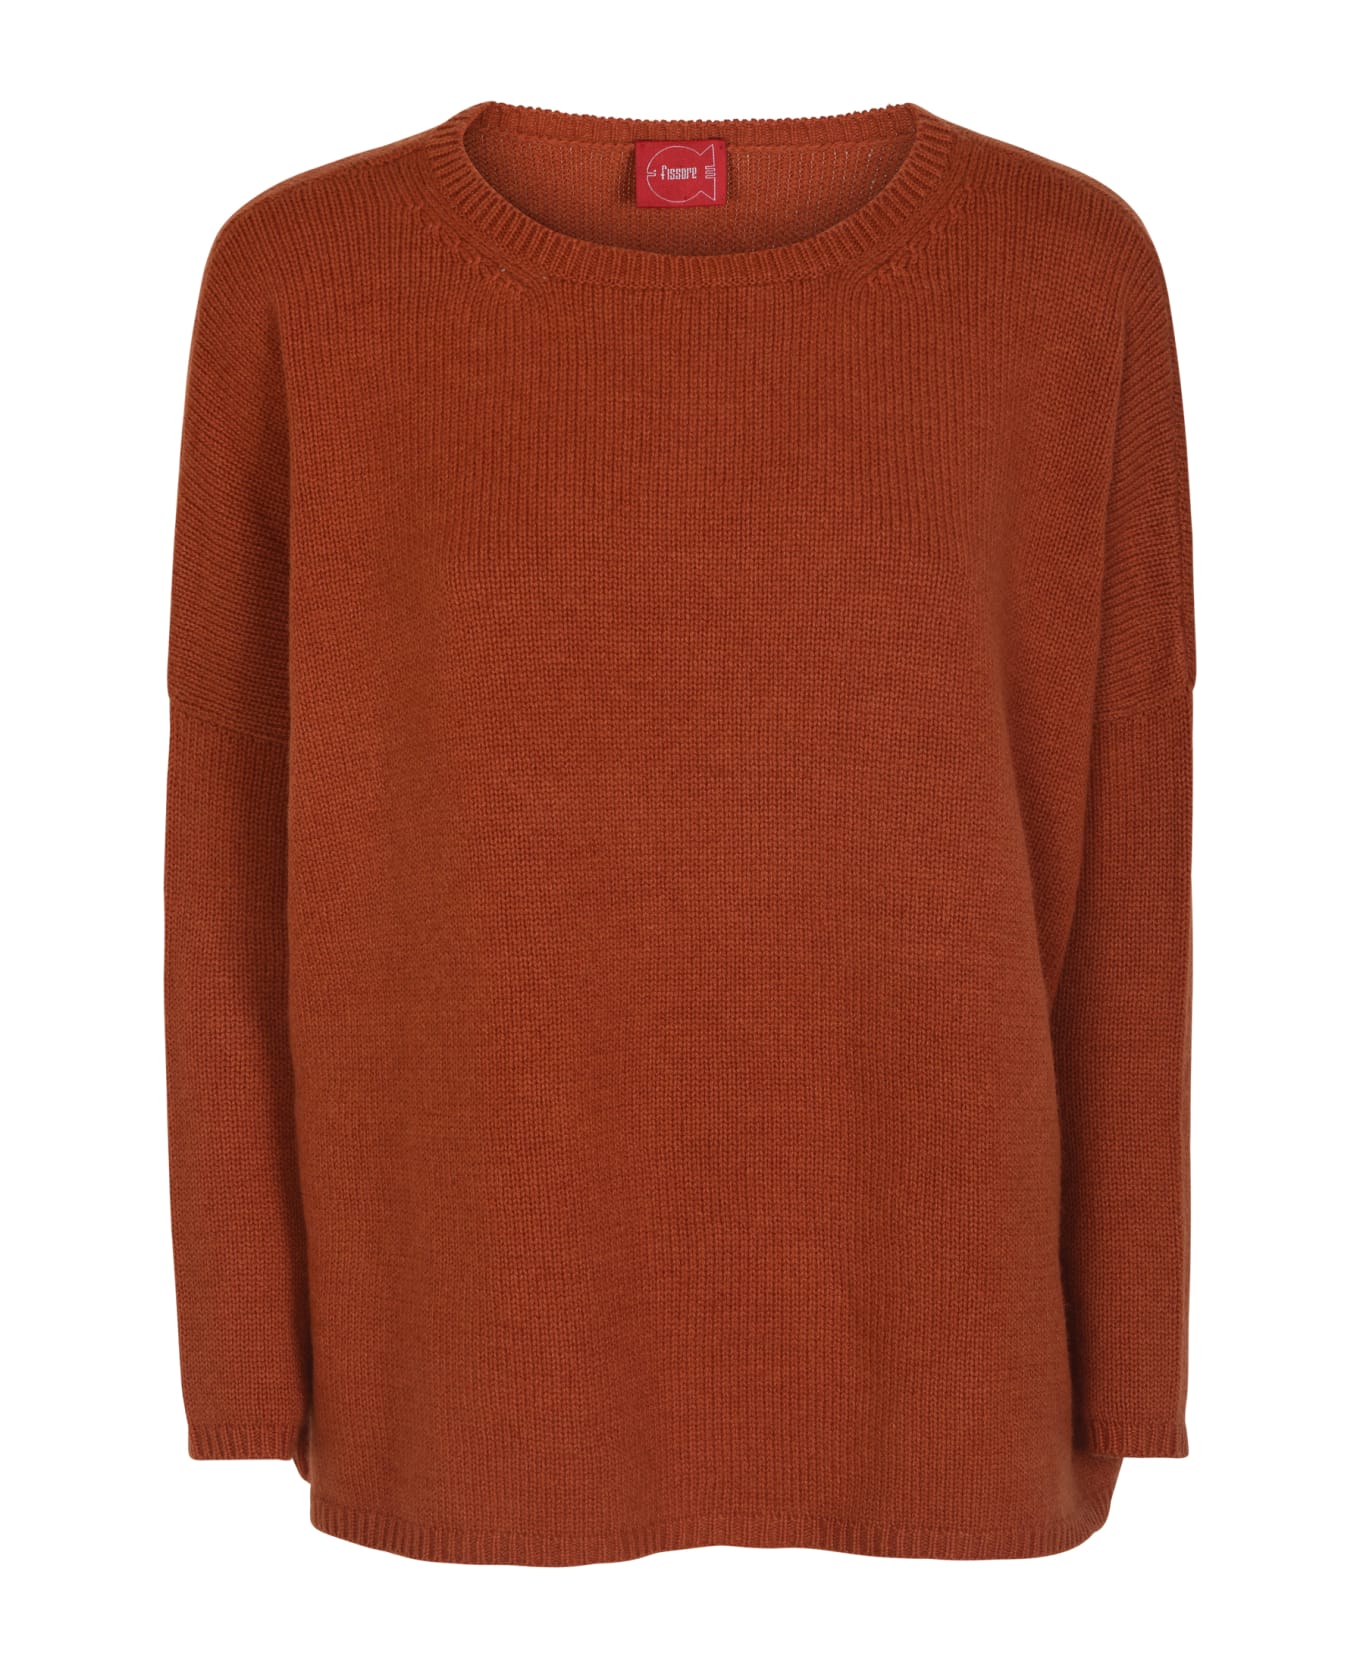 f cashmere Round Neck Knit Plain Sweater - Brick ニットウェア